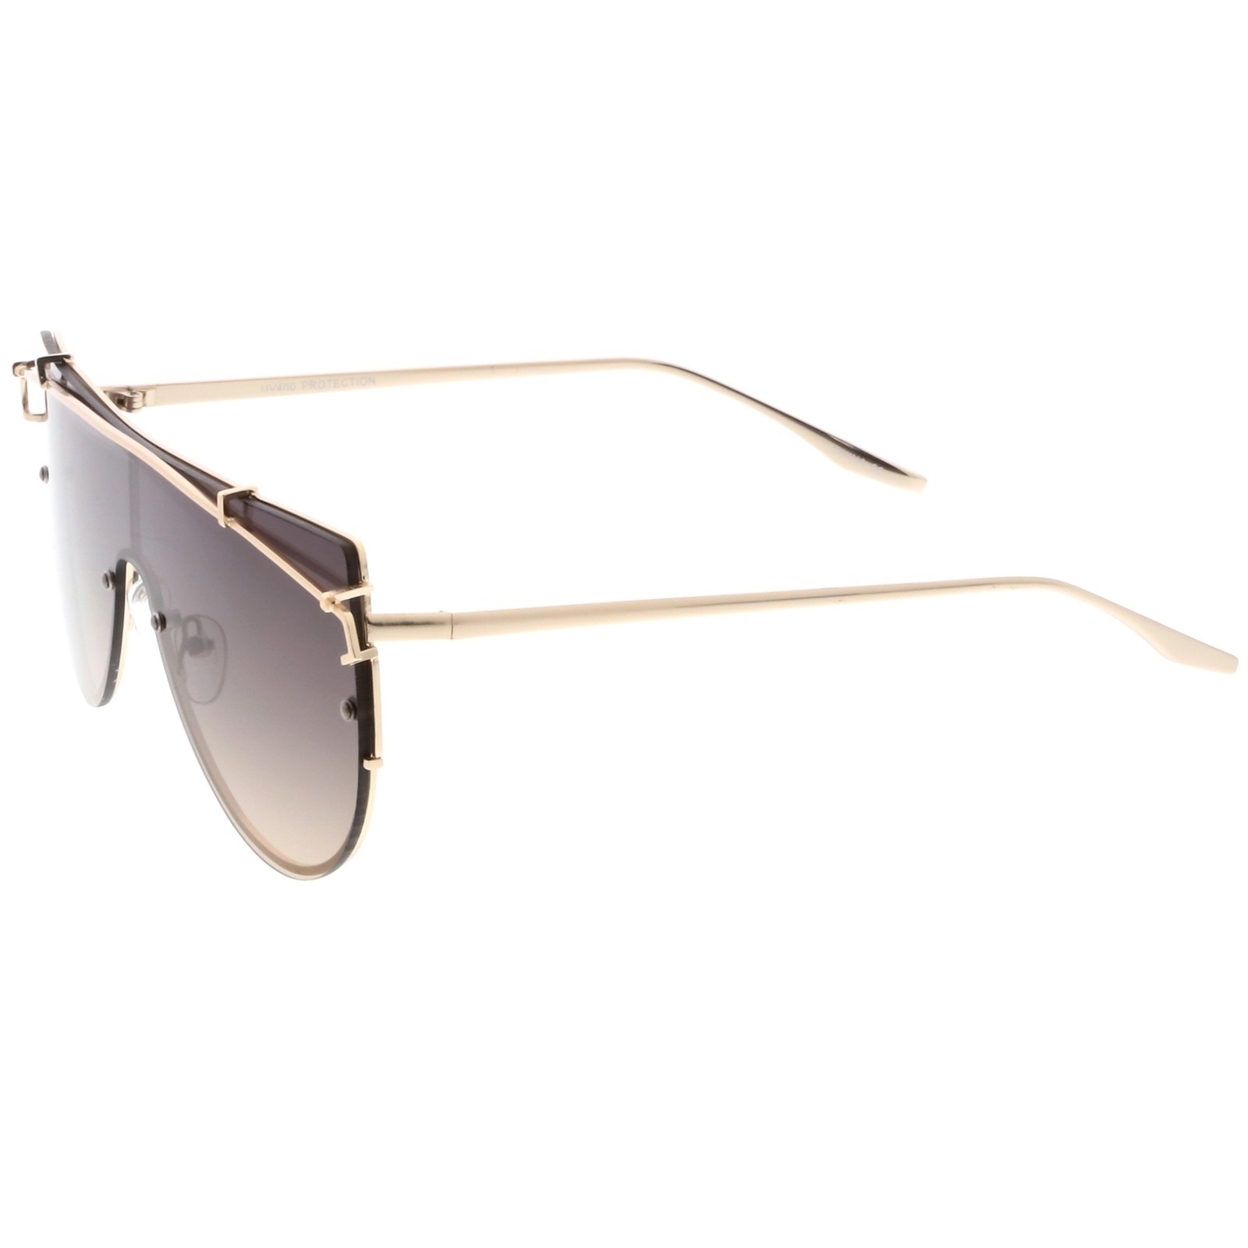 Futuristic Rimless Metal Crossbar Nuetral Colored Mono Lens Shield Sunglasses 64mm - Gold / Brown